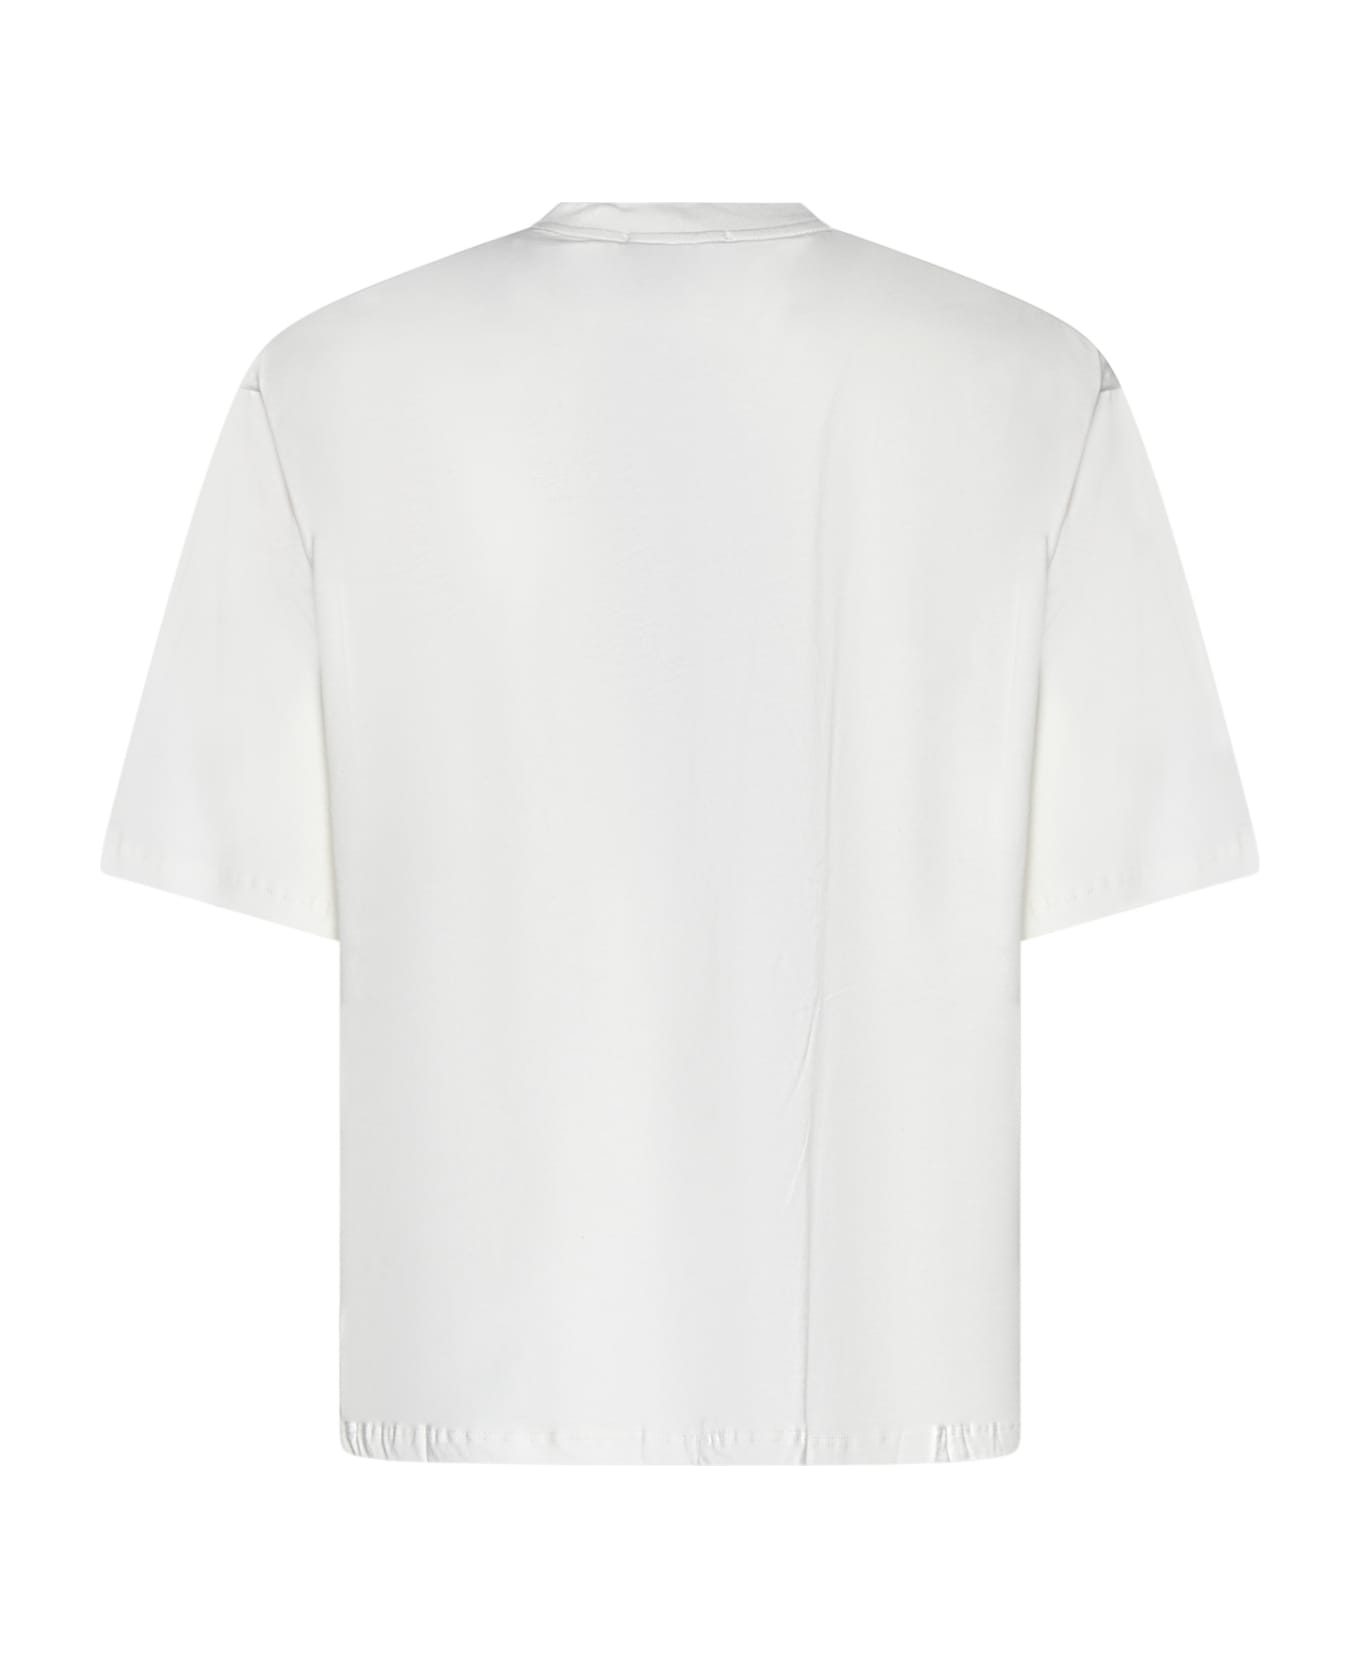 A Paper Kid T-Shirt - White